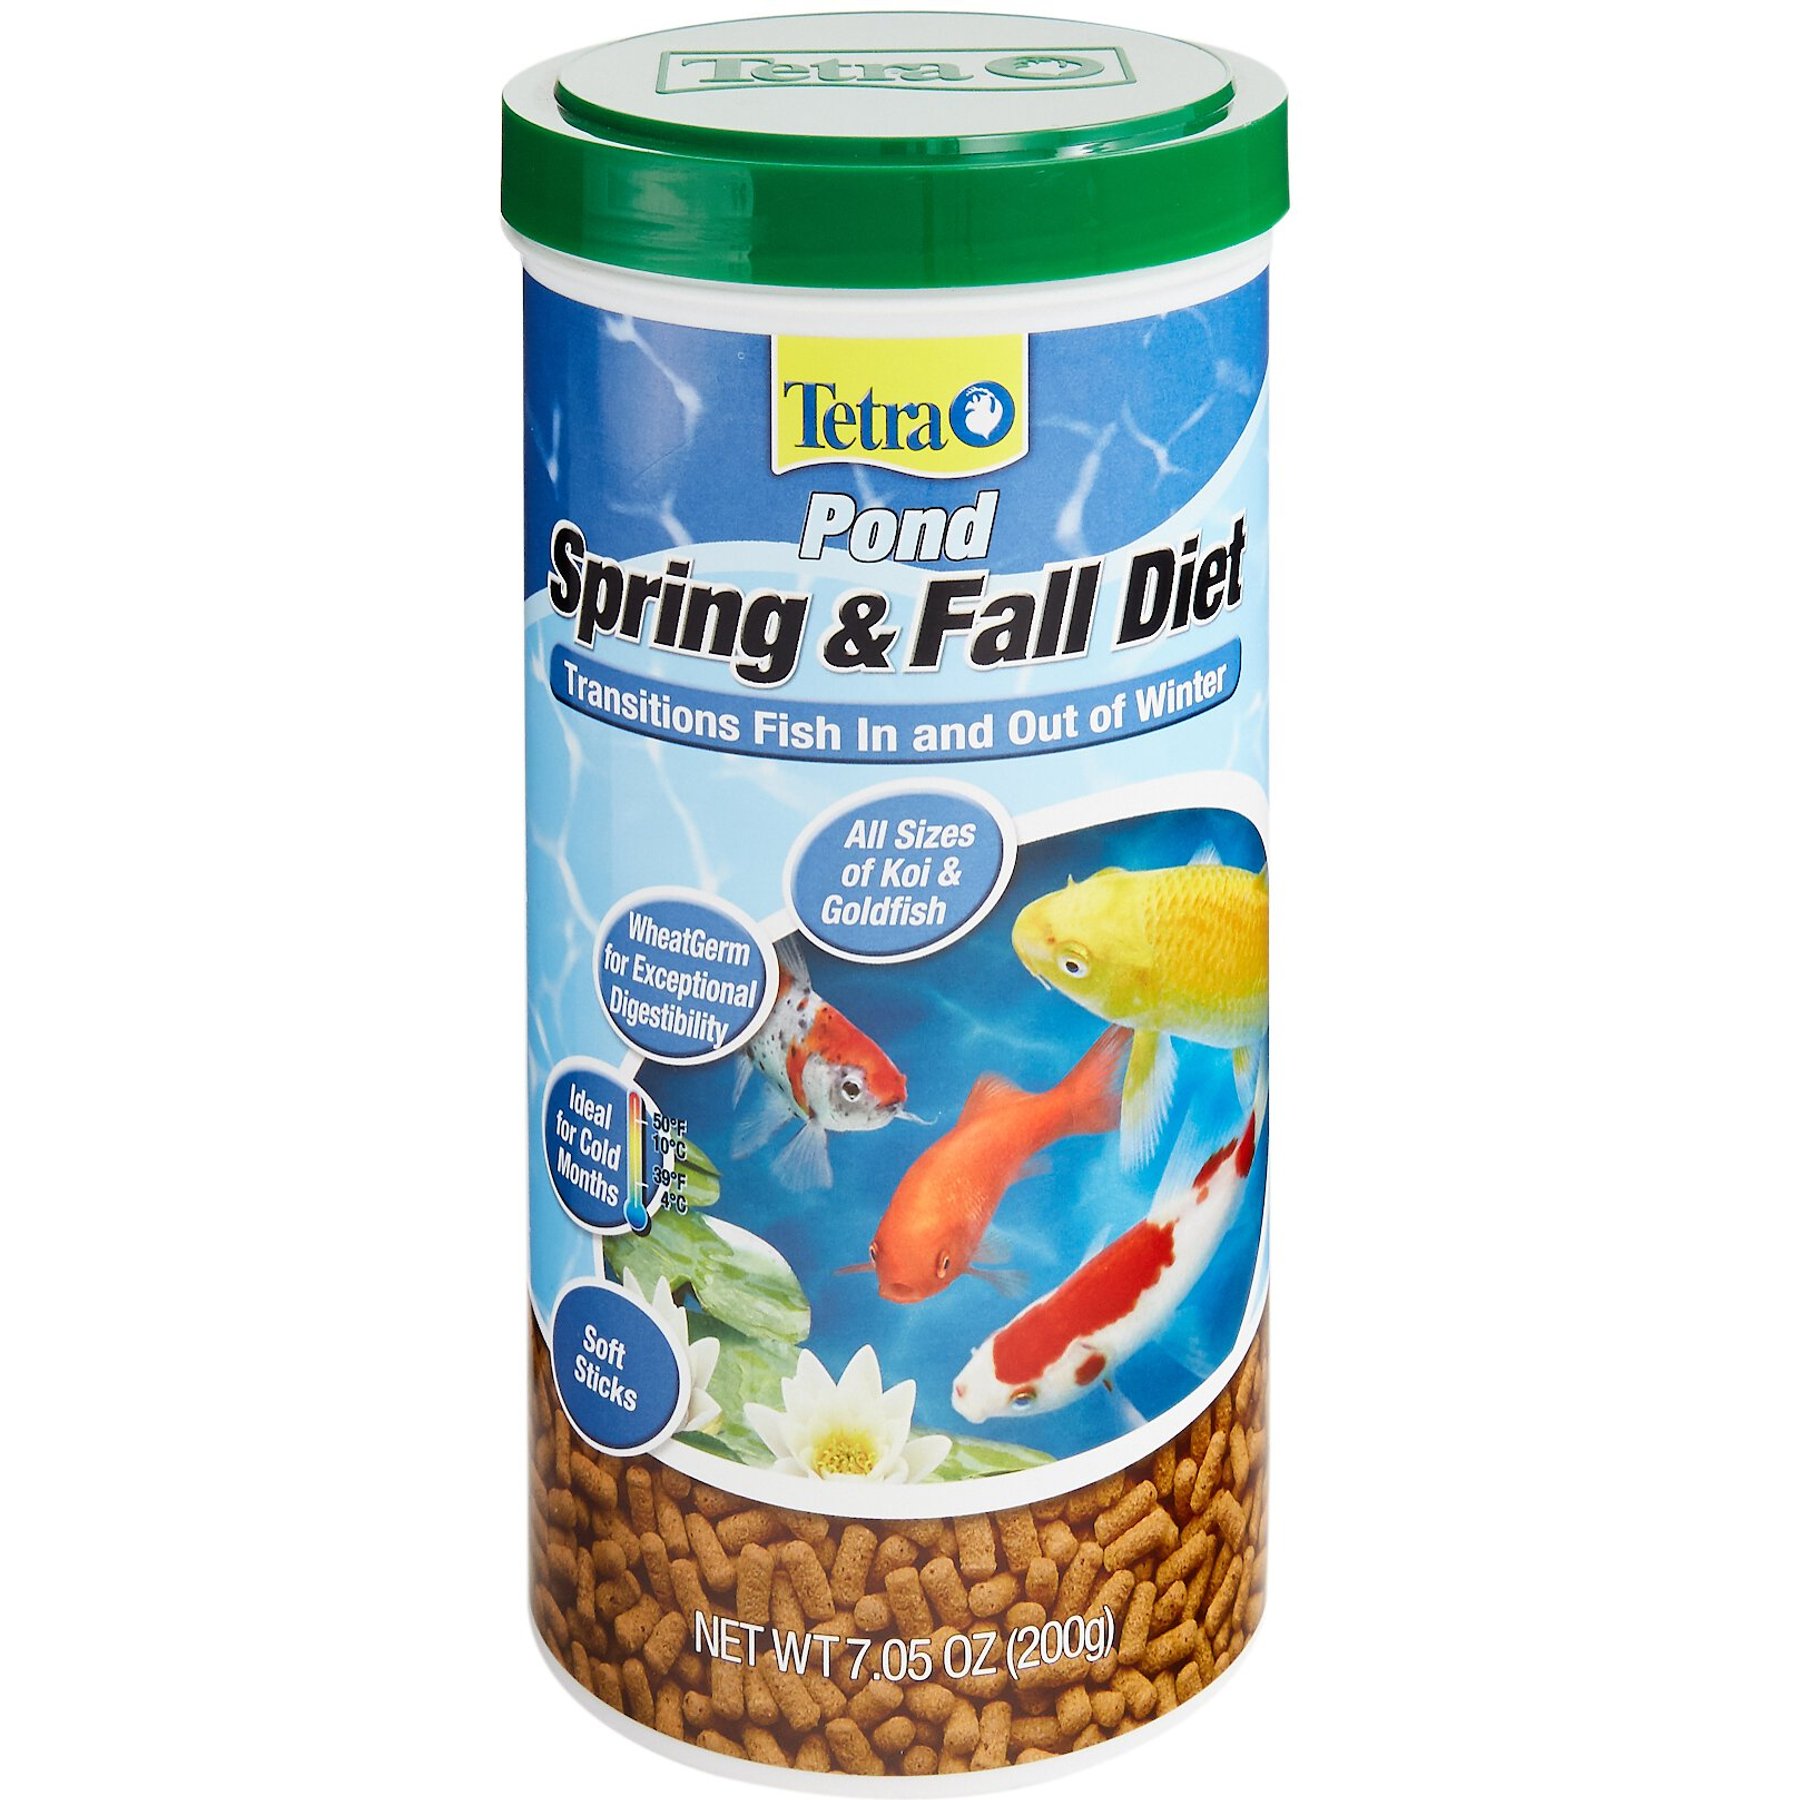 Tetra Pond Sticks Goldfish & Koi Fish Food, 1.72-lb bag